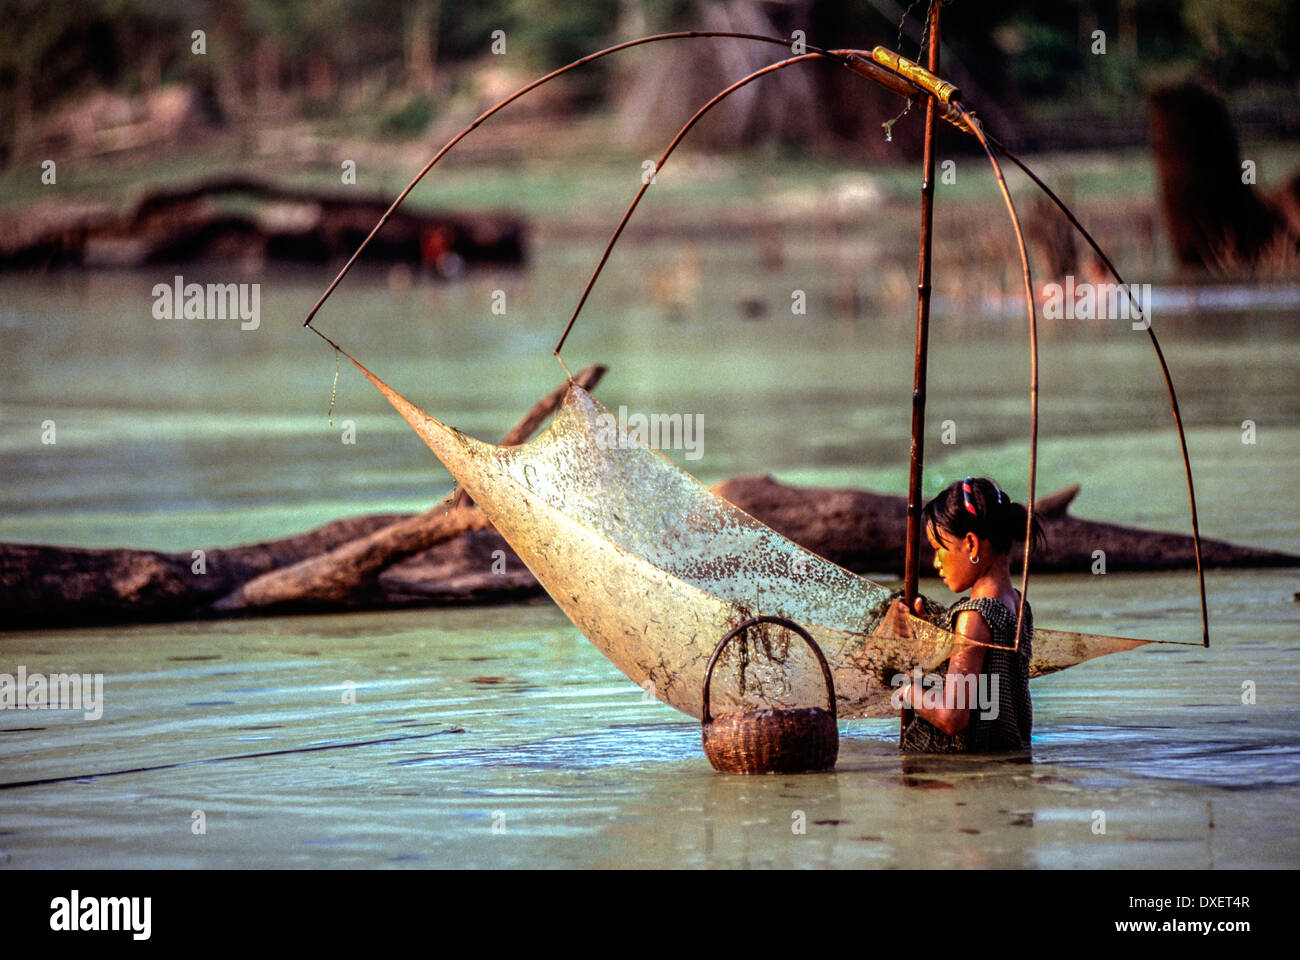 Laos children fishing net bamboo poles riverbank trees sunshine